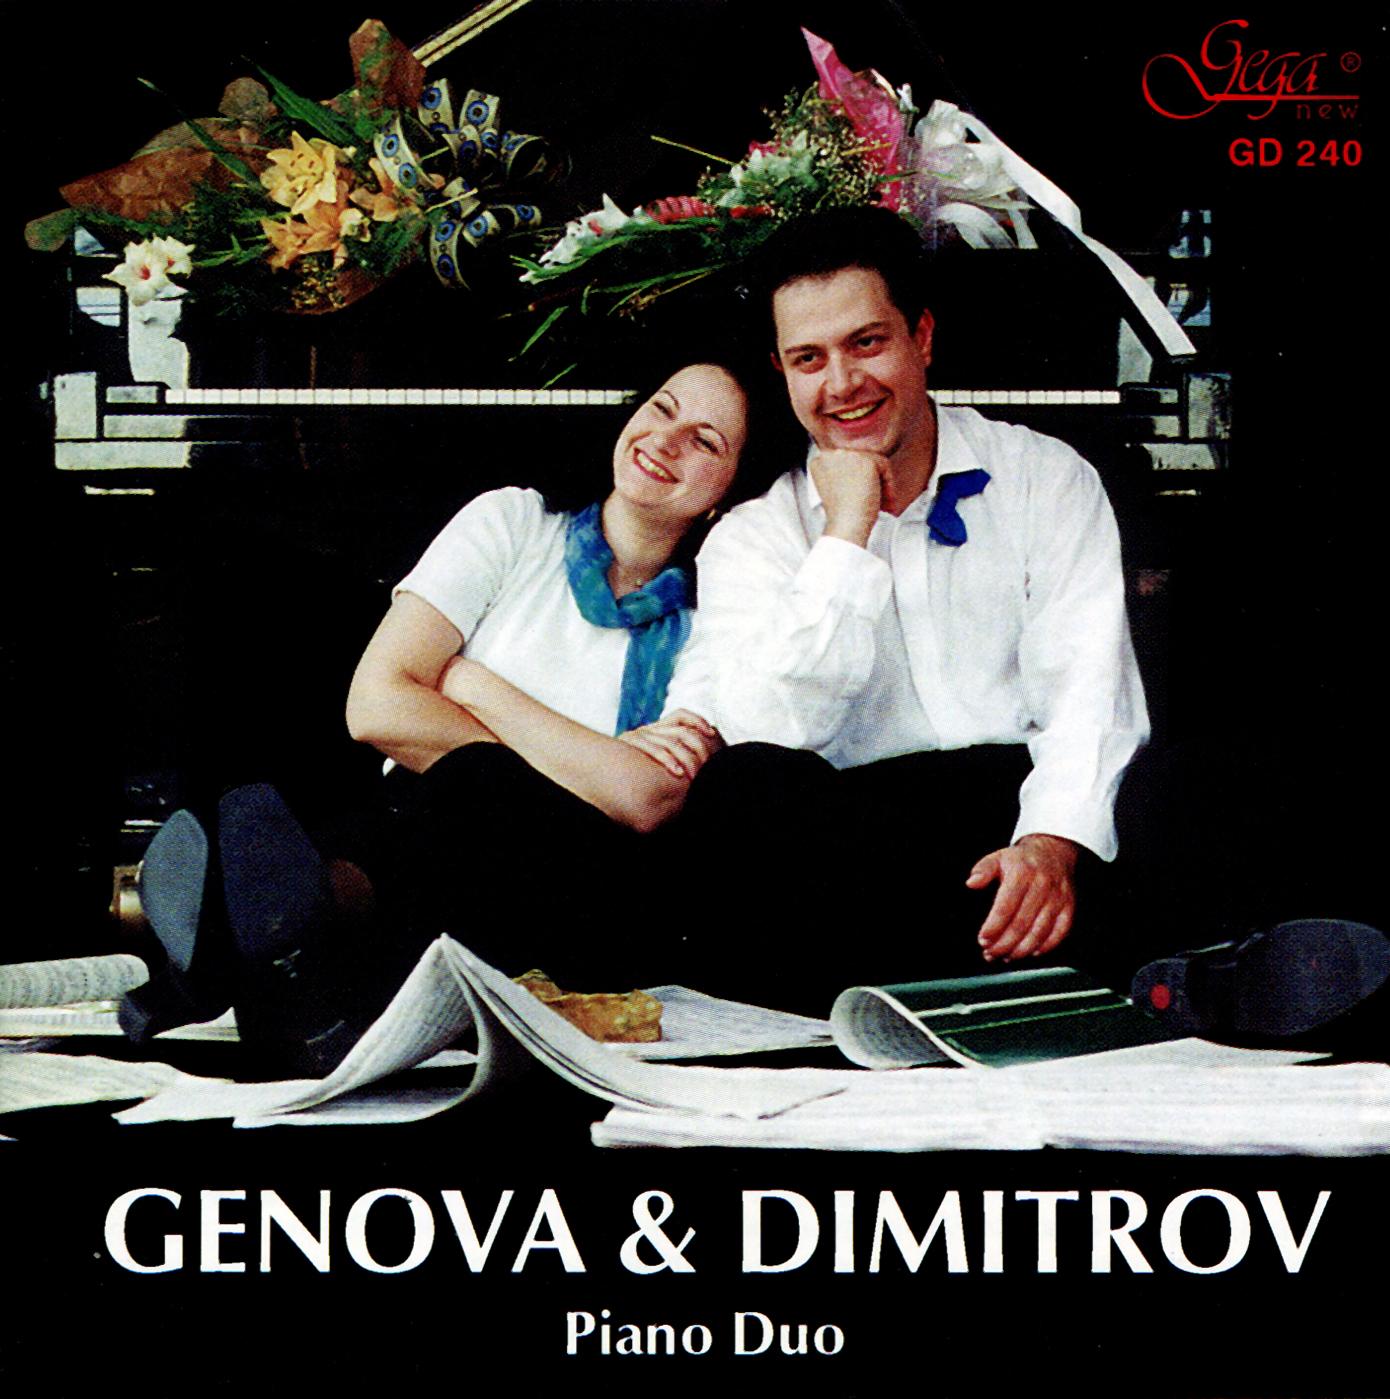 Genova & Dimitrov Piano Duo (Gega New GD 240) |Cover